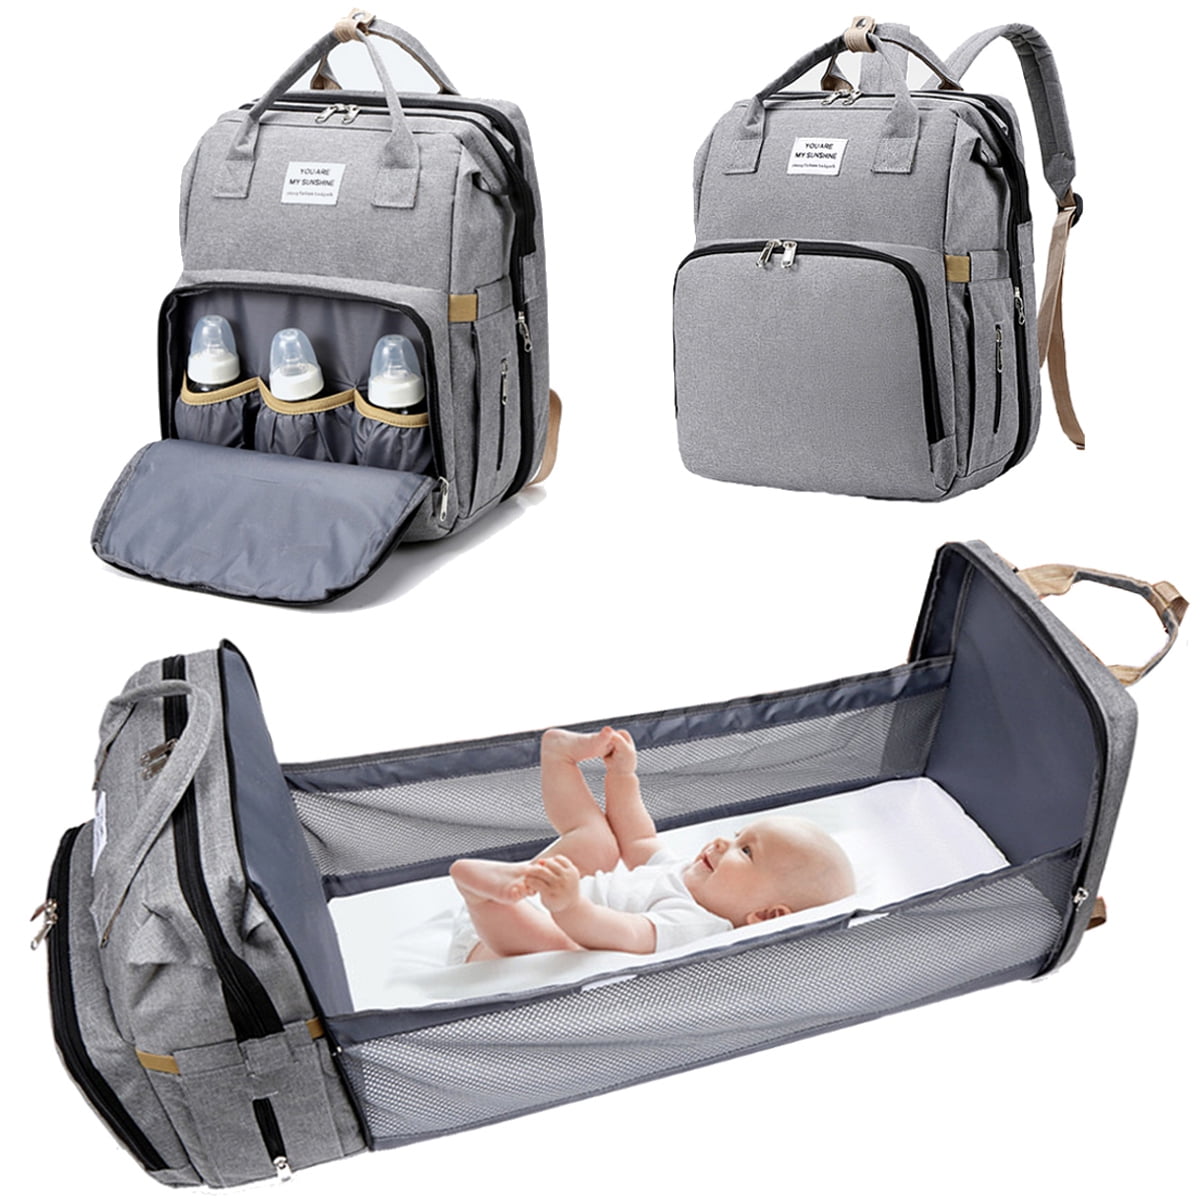 Baby Nappy Changing Bag Black Adjustable Straps fits any Pram Travel 4 pods 